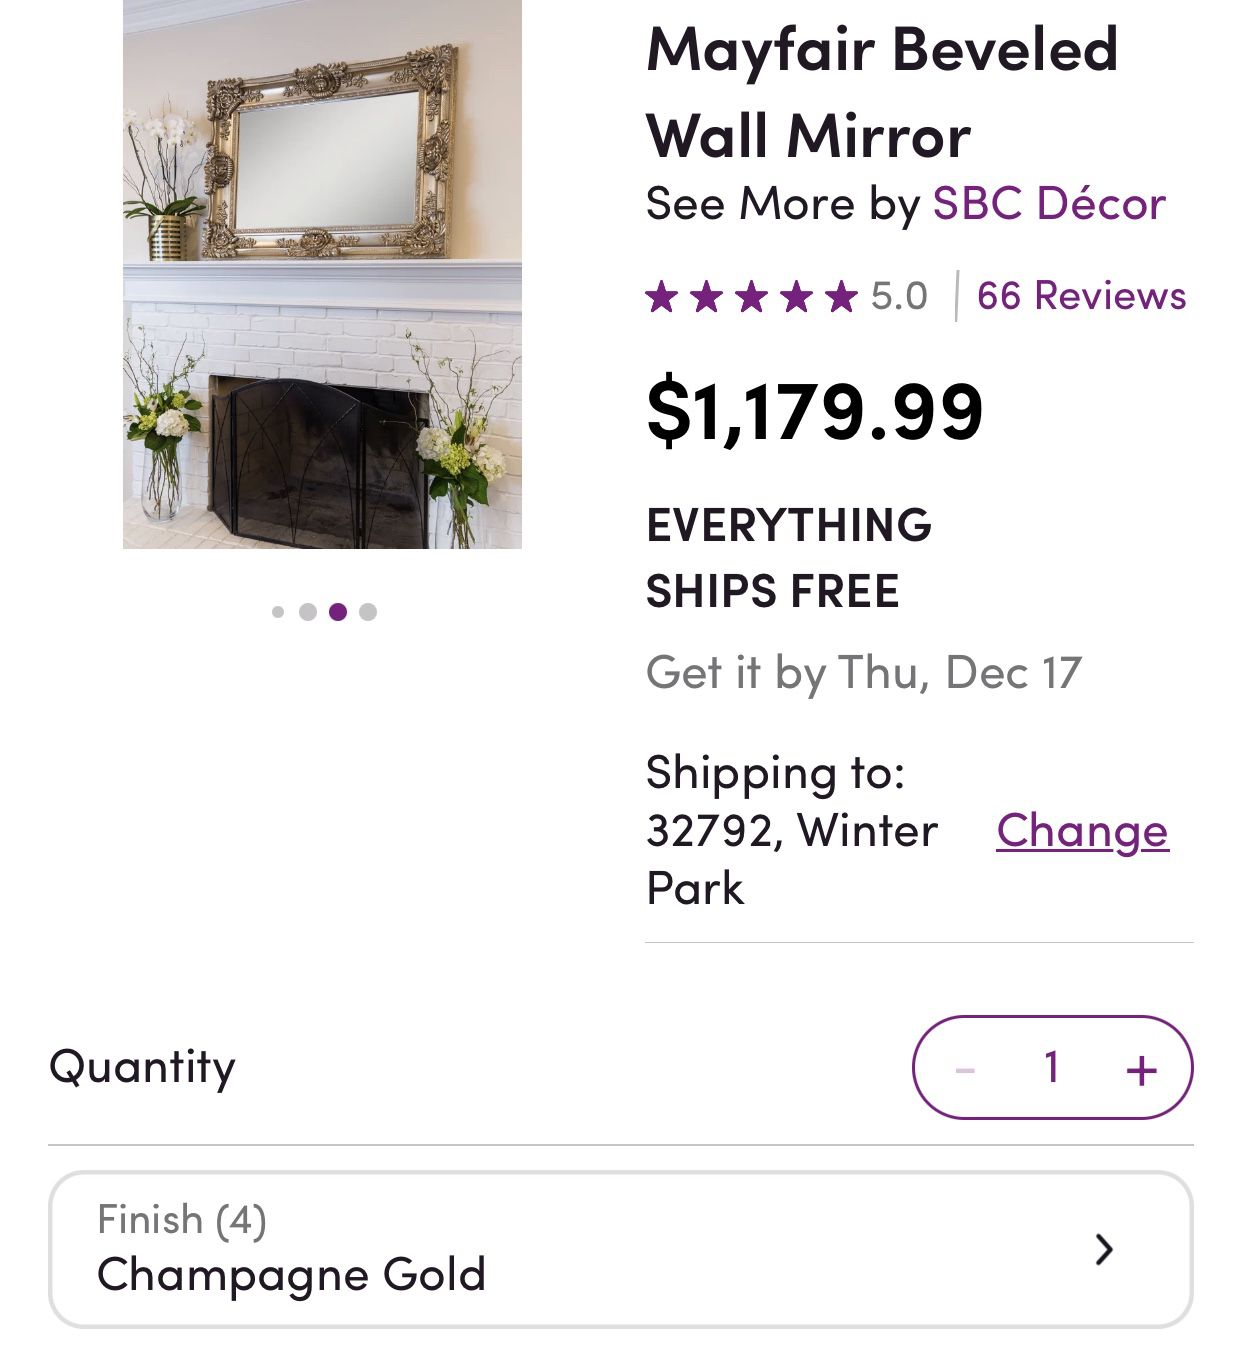 Mayfair Beleved Wall Mirror